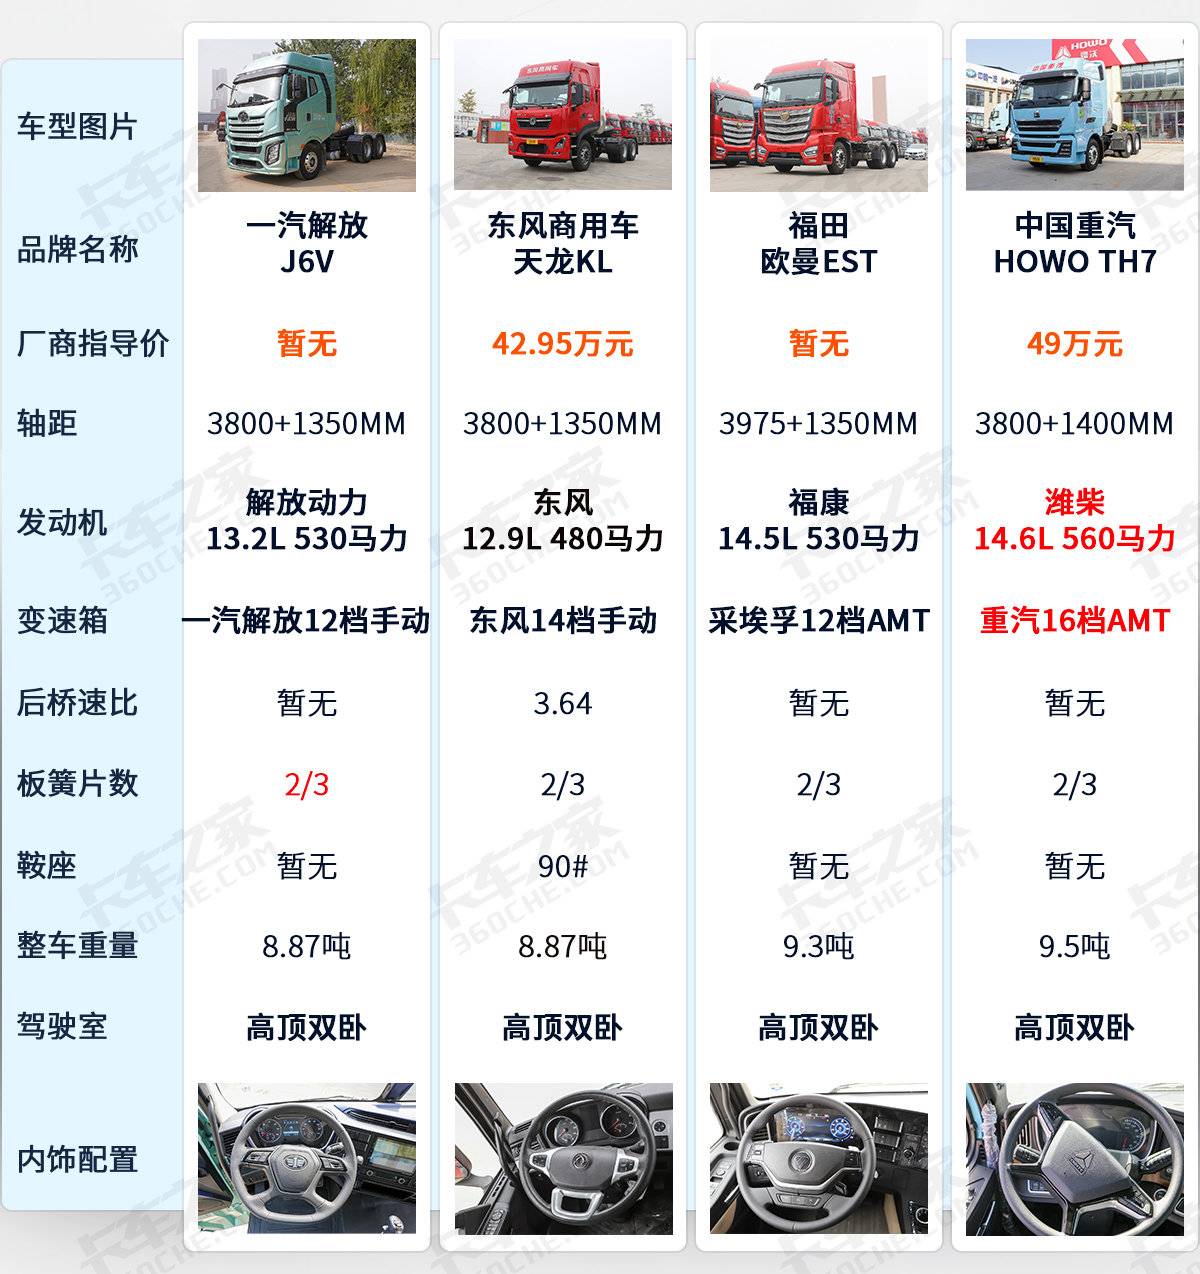 6x4 LNG牵引车降价促销 最高优惠5.58万 搭载560马力+AMT动力链